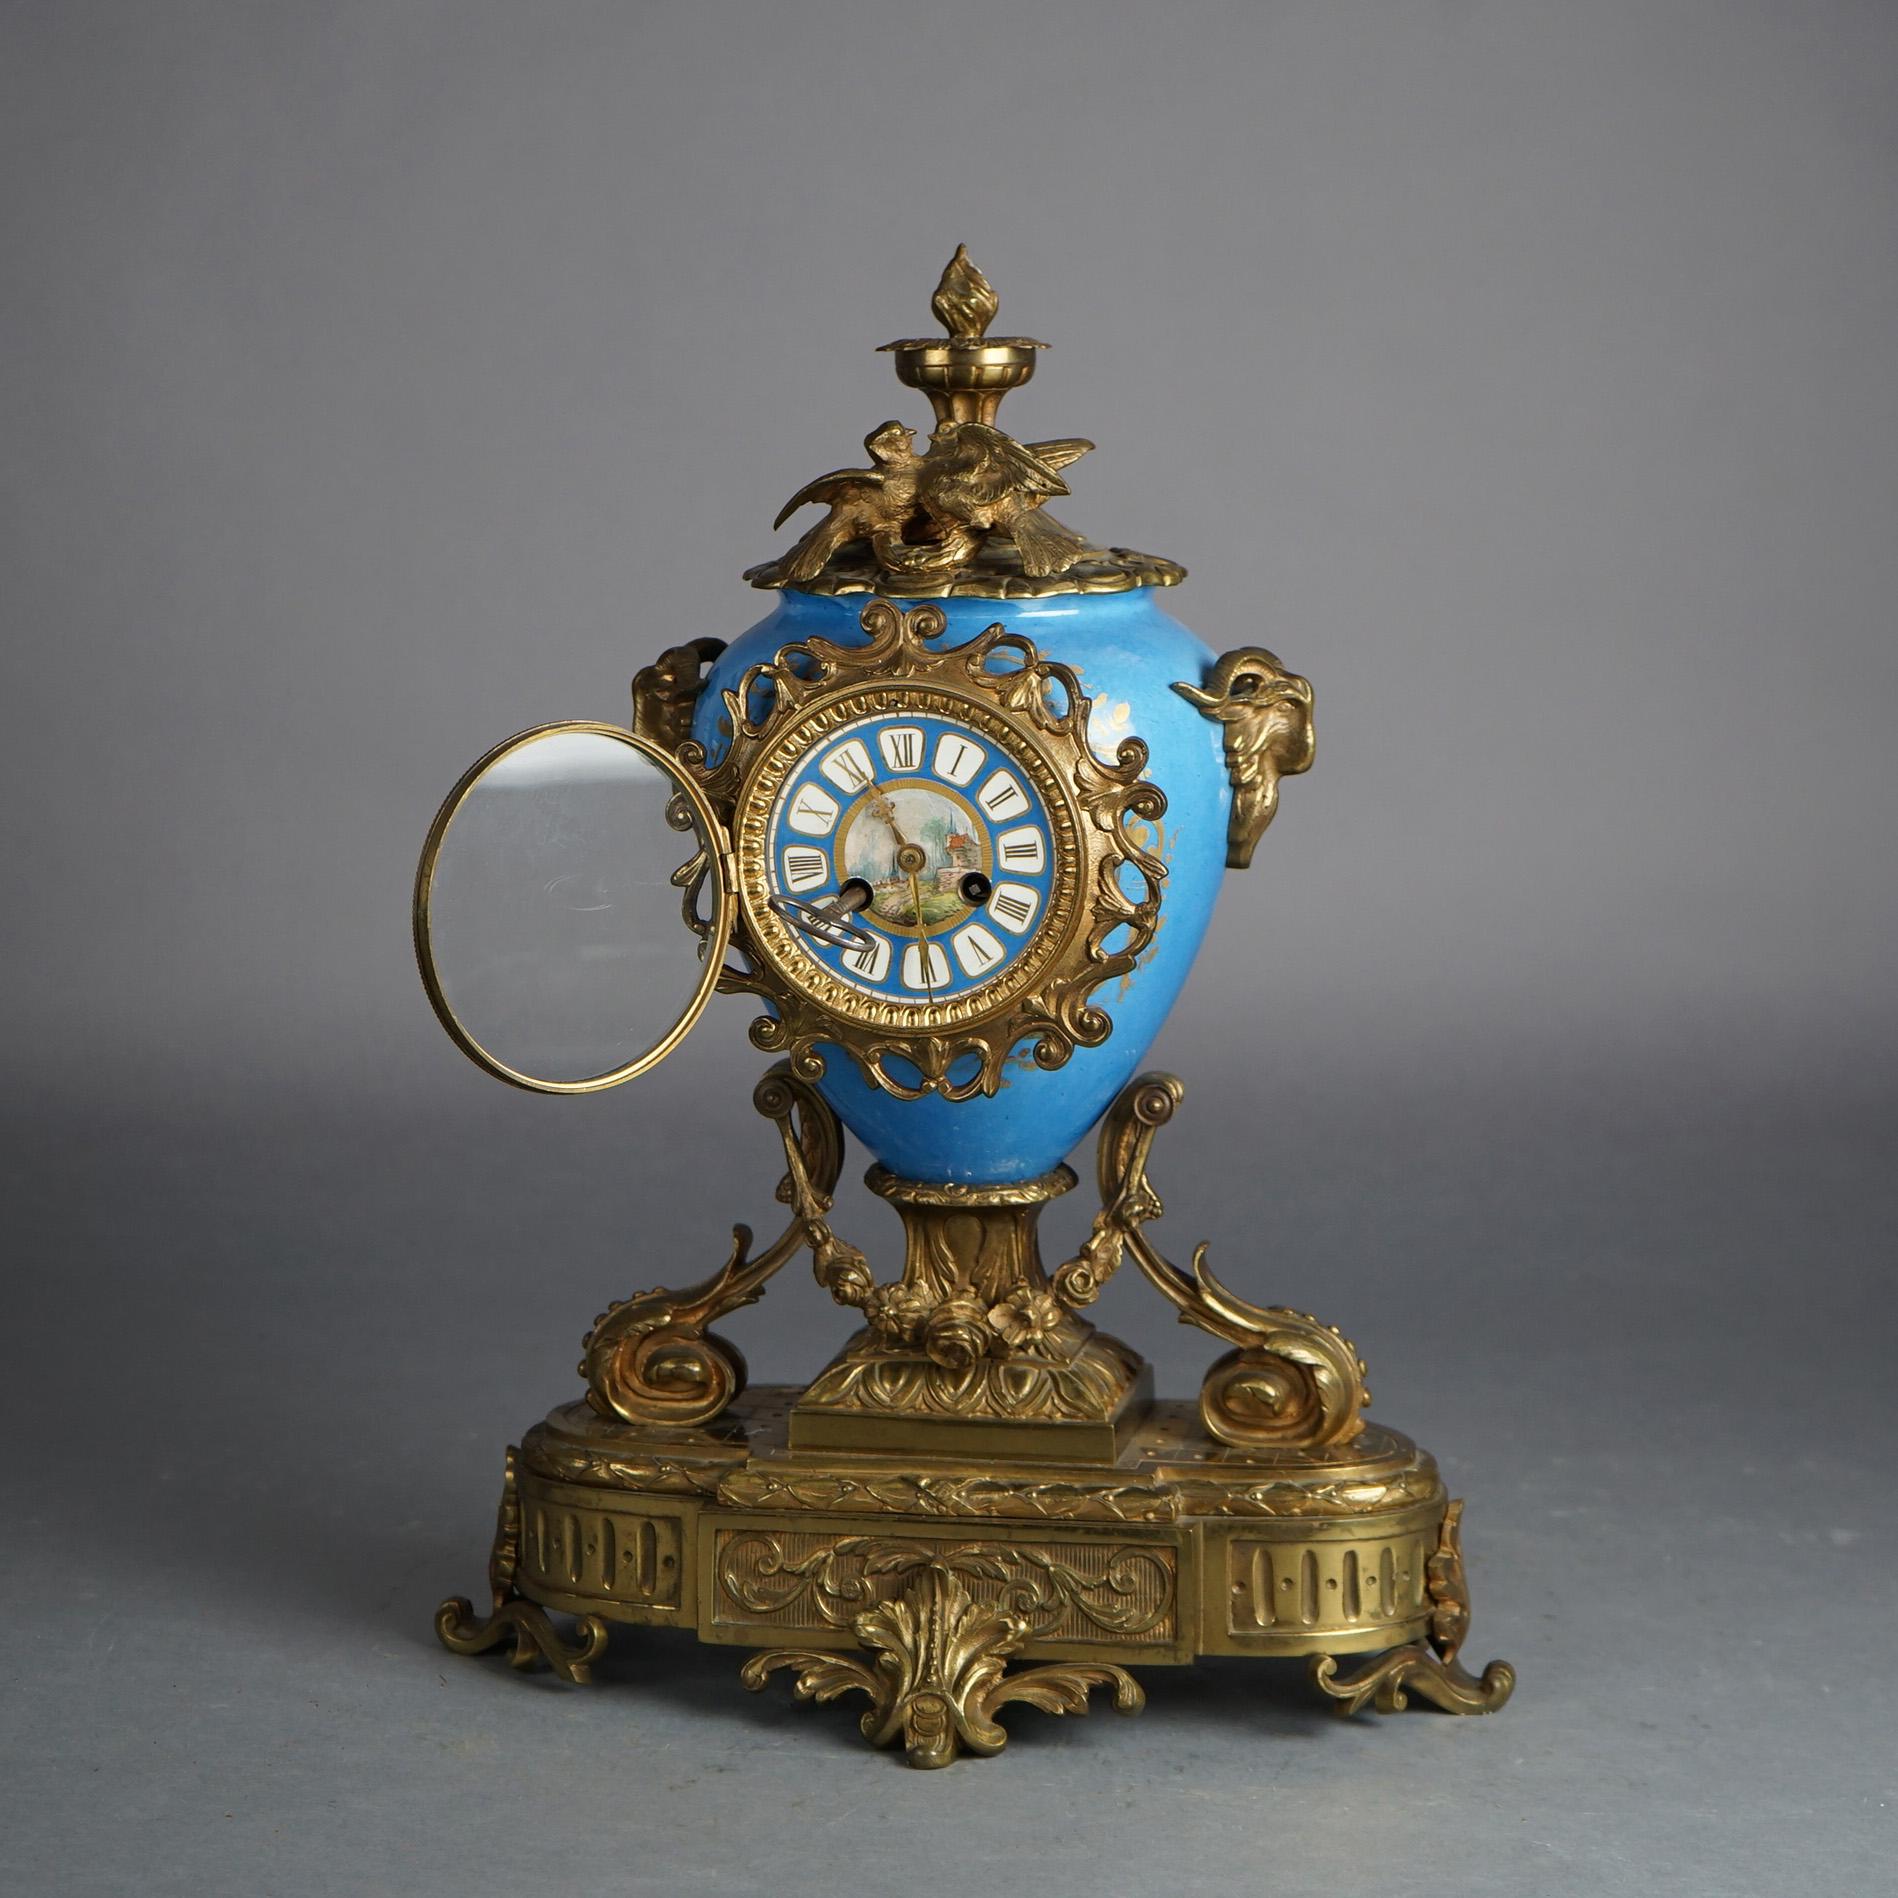 Antique French Sevres Bronze Mounted Figural Aqua Porcelain Mantle Clock with Cherubs and Foliate Elements, C1880

Measures- 19.75''H x 15.25''W x 7''D